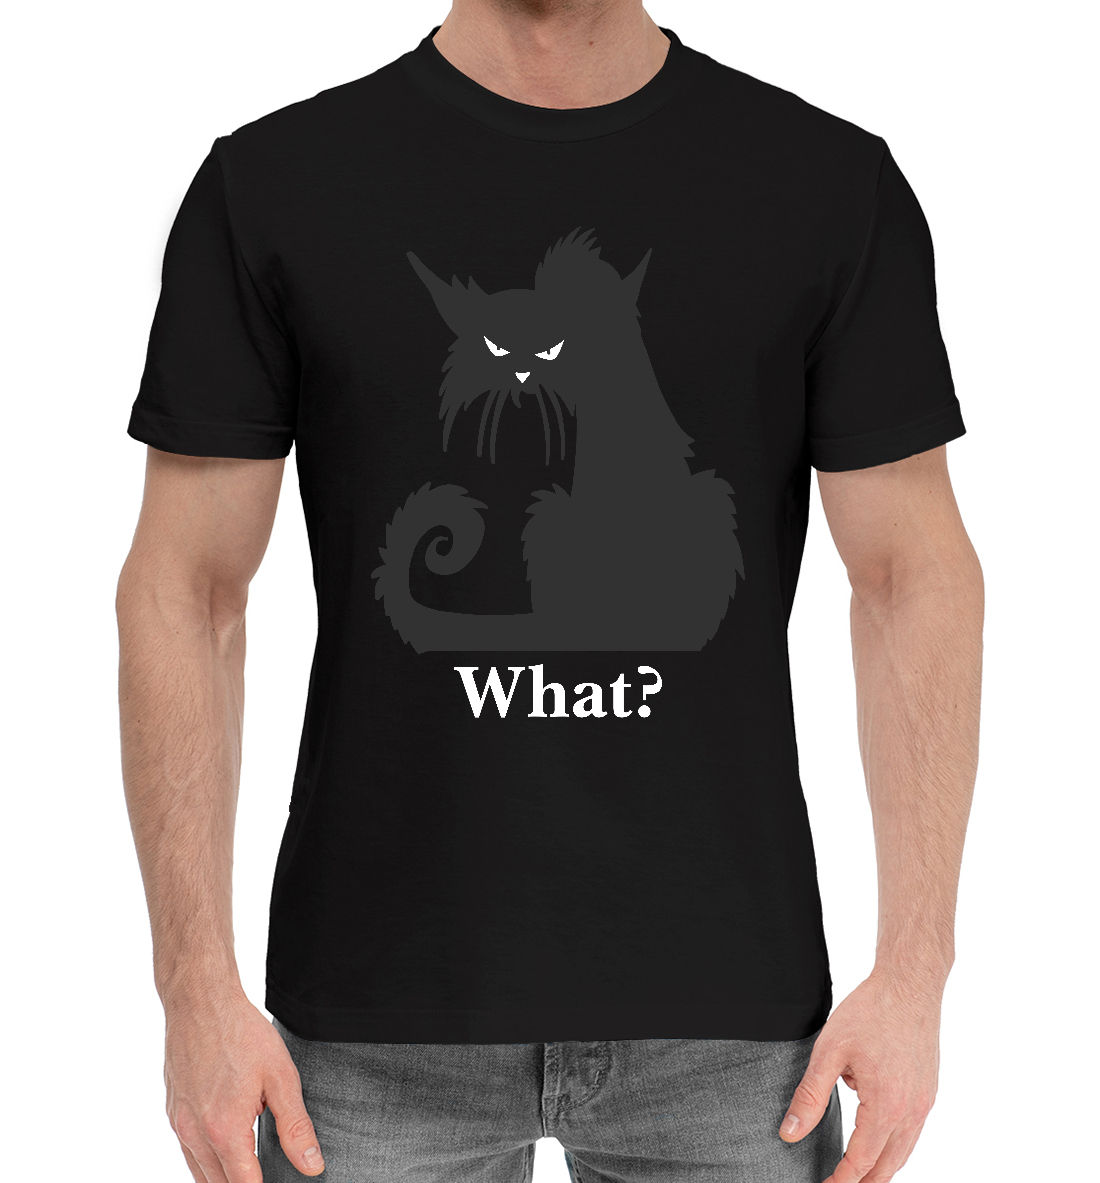 Мужская Хлопковая футболка с надписью What?, артикул CAT-950825-hfu-2mp